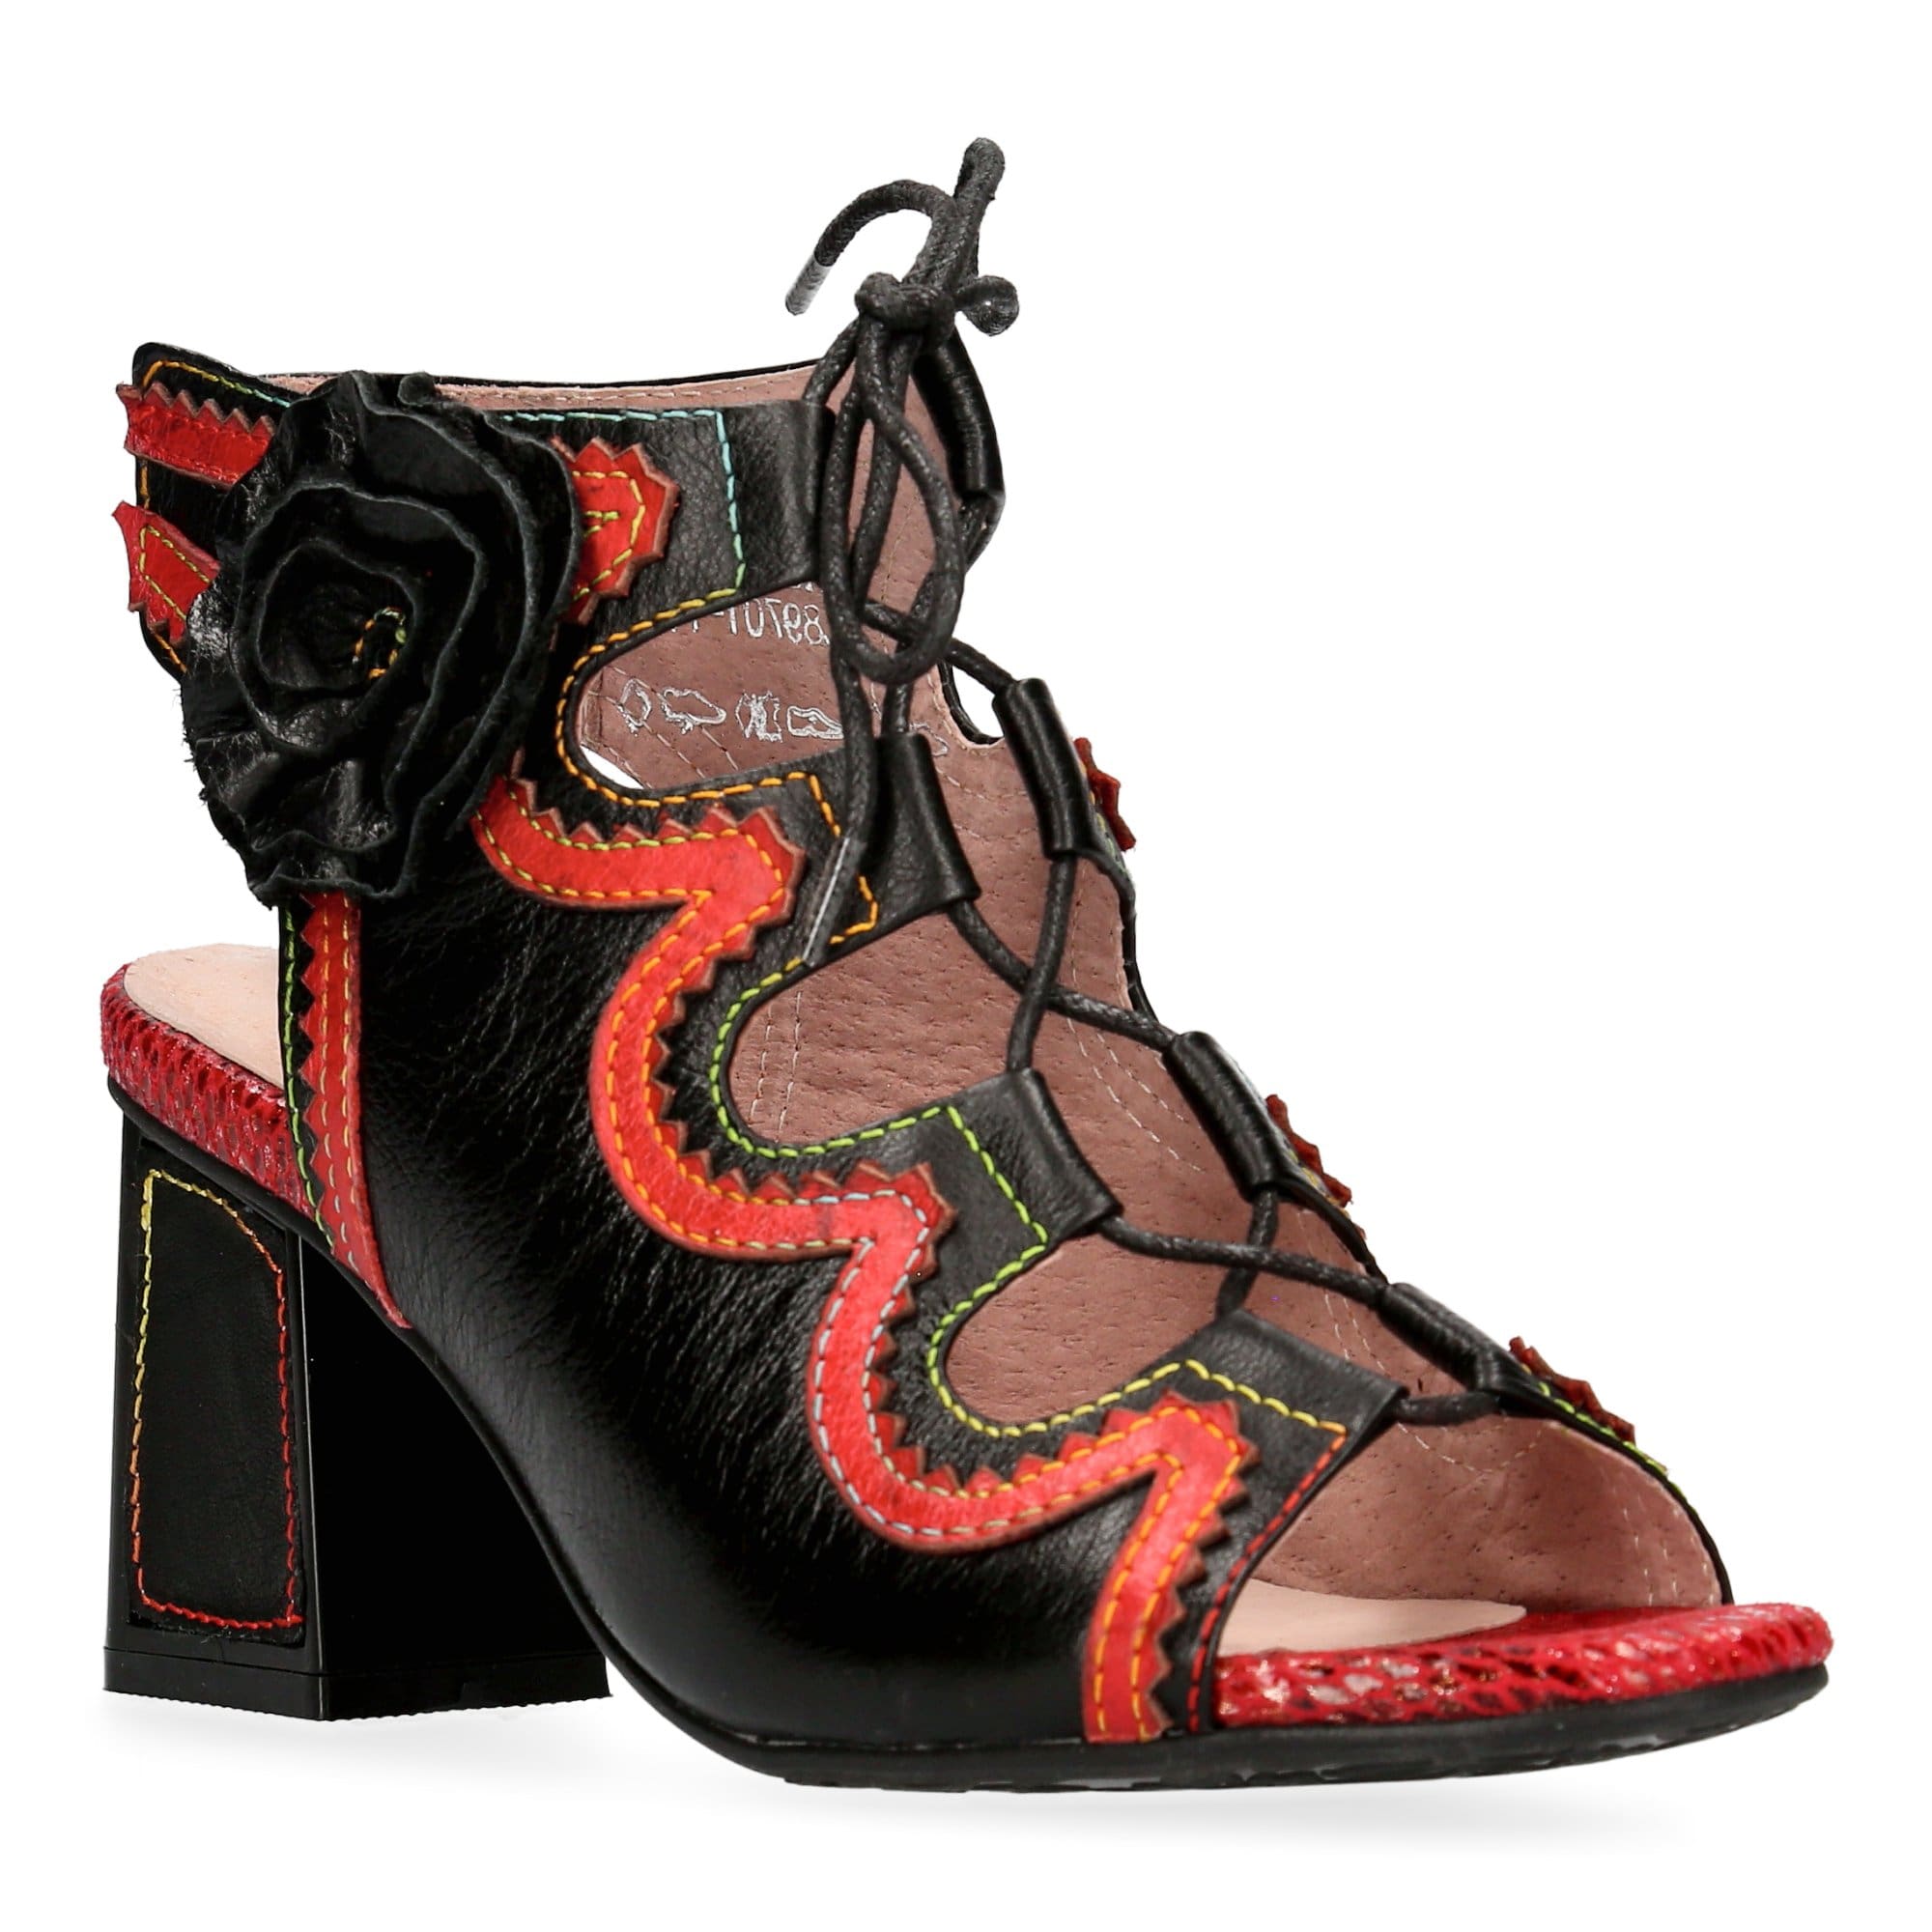 Chaussures HACKIO 11 - Sandale